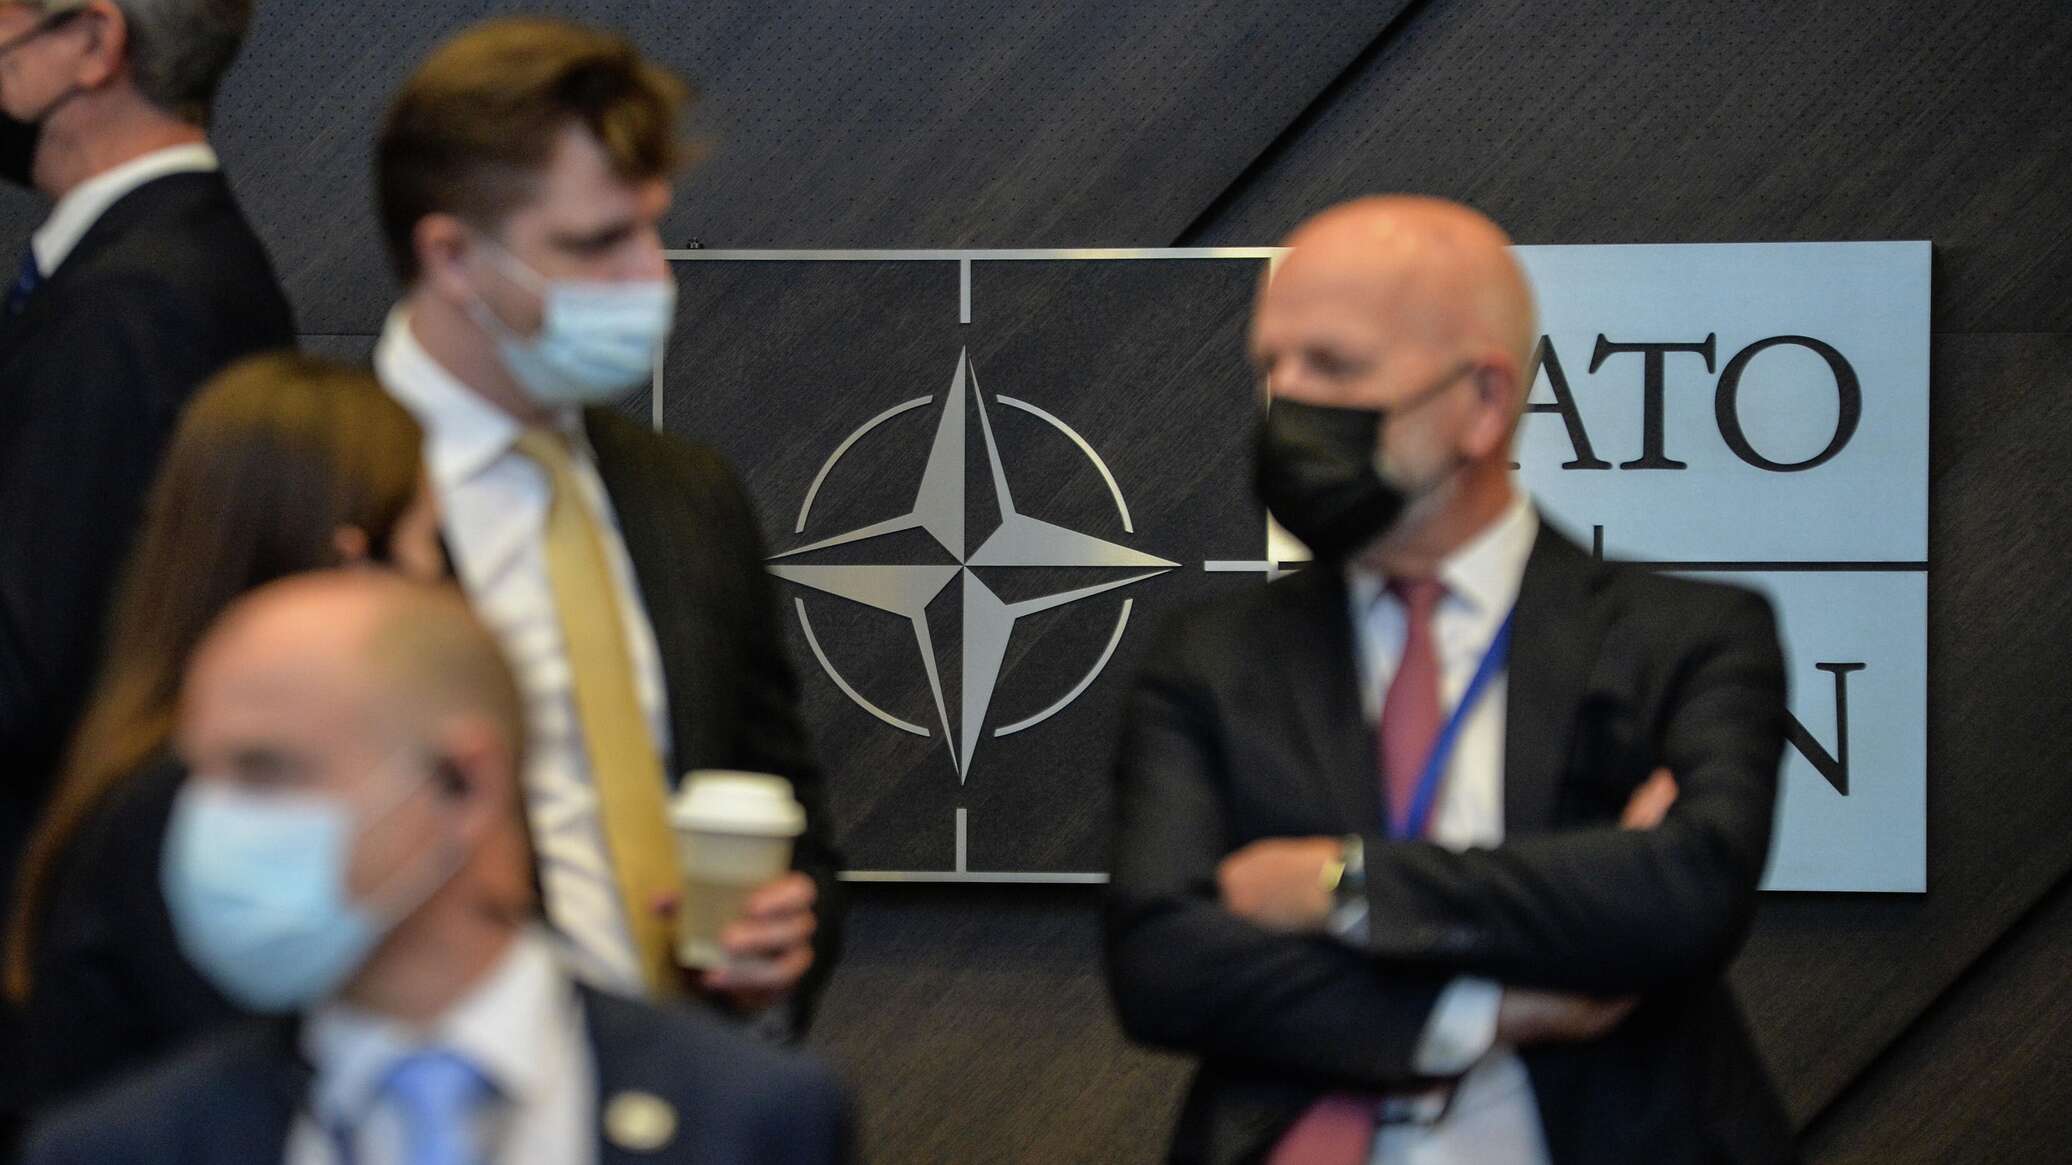 Переговоры с нато. НАТО заседание 2022. Заседание совета Россия–НАТО 2022. Переговоры Россия НАТО.